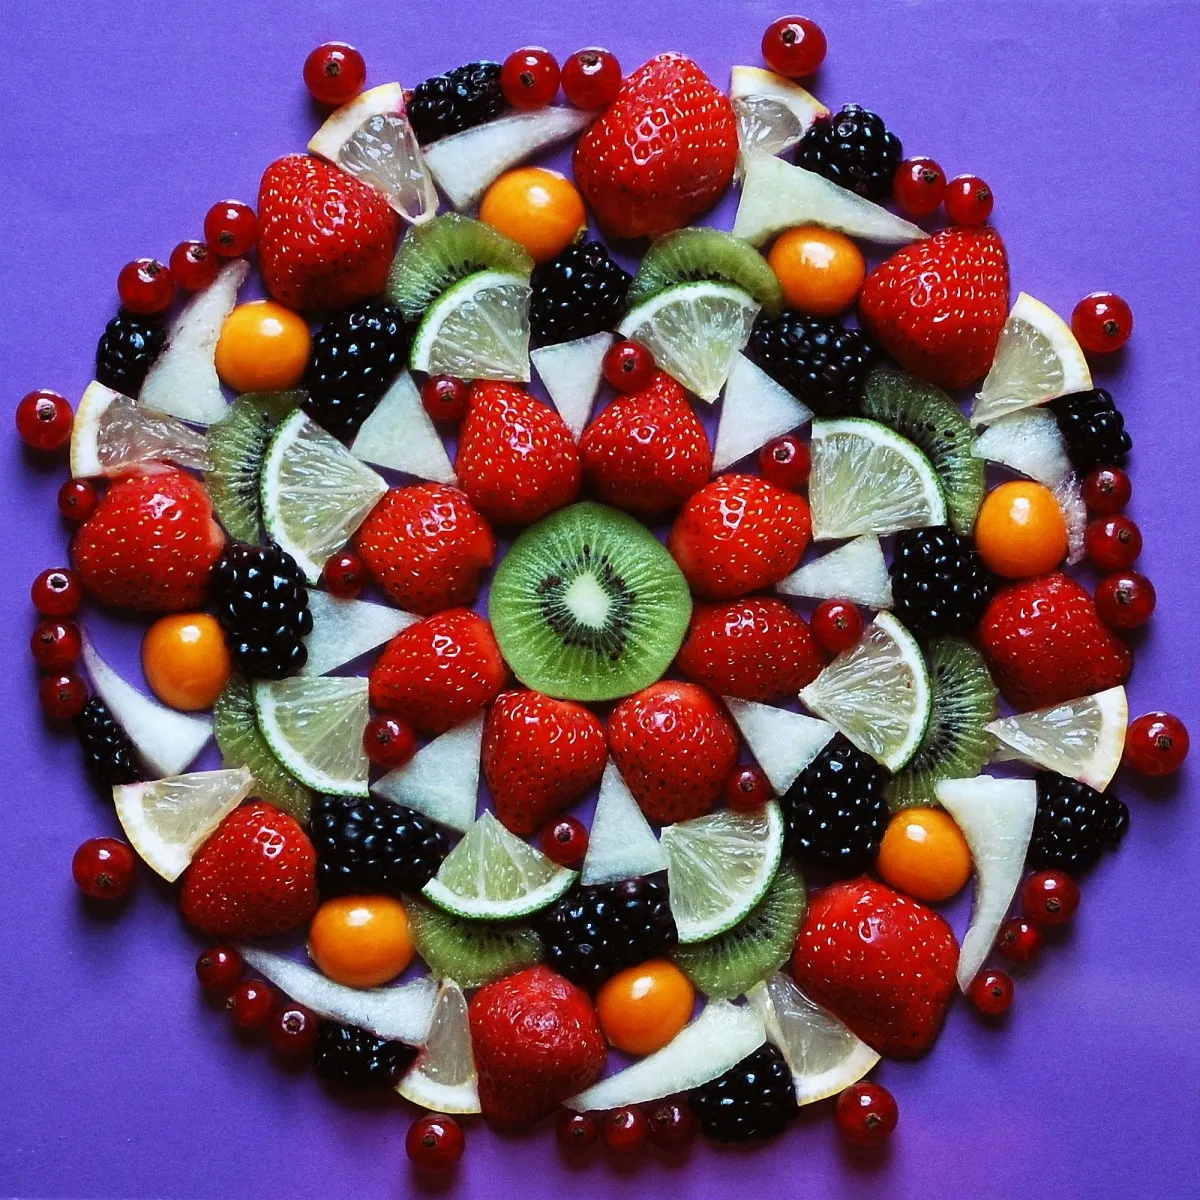 fruits_fruit_apple_citrus_fruits_vitamins_exotic_sweet_delicious-915800.jpg!d.jpg